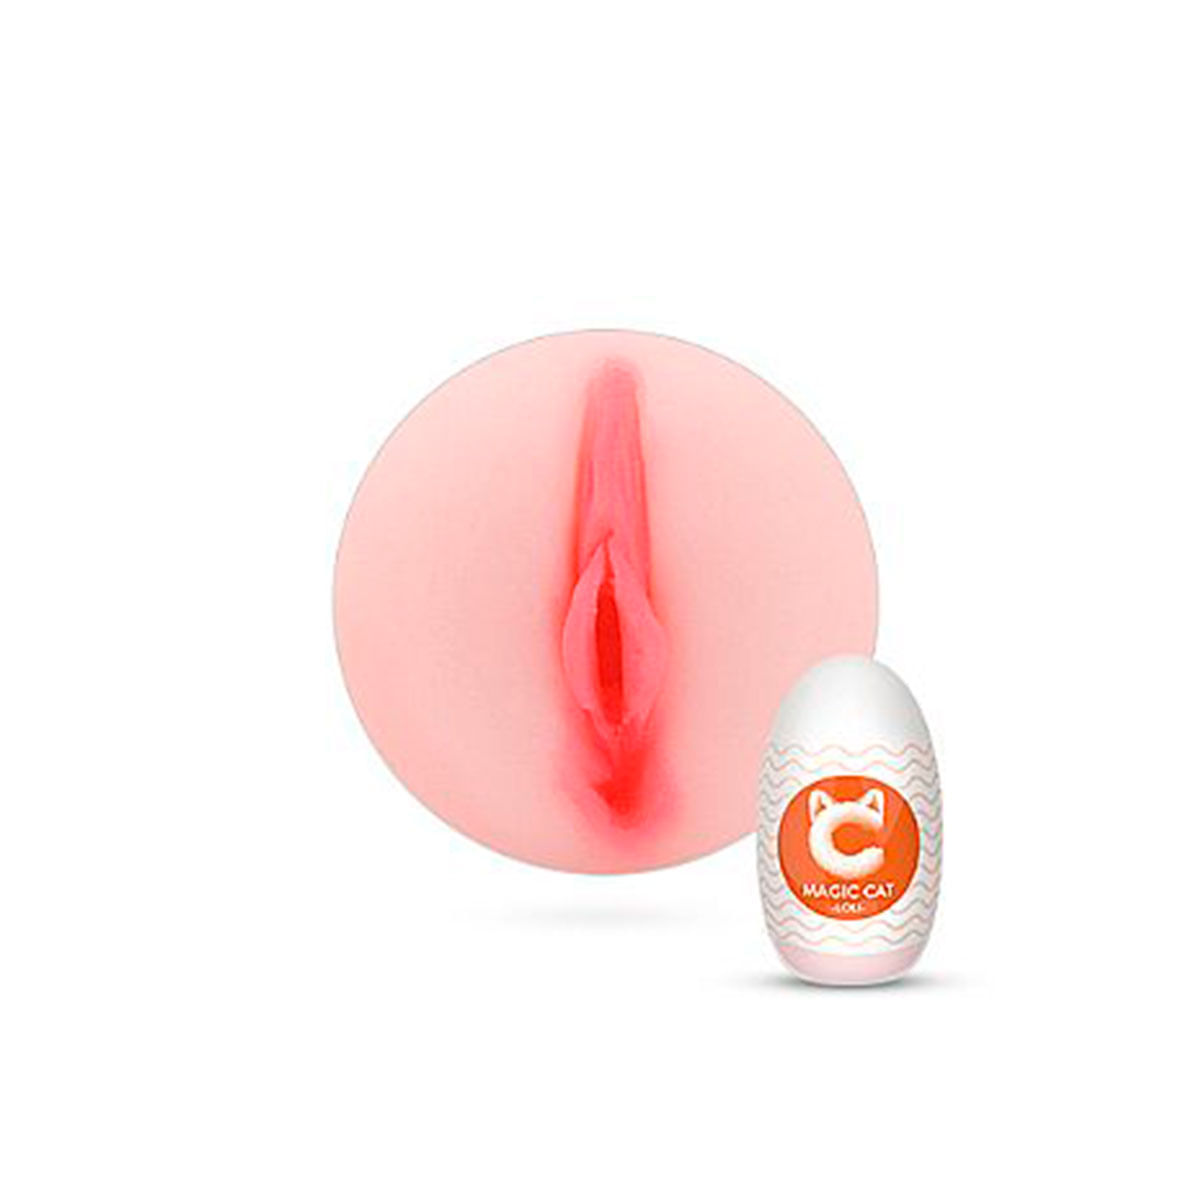 Magic Cat Loli Egg em CyberSkin Formato Vagina Sexy Import